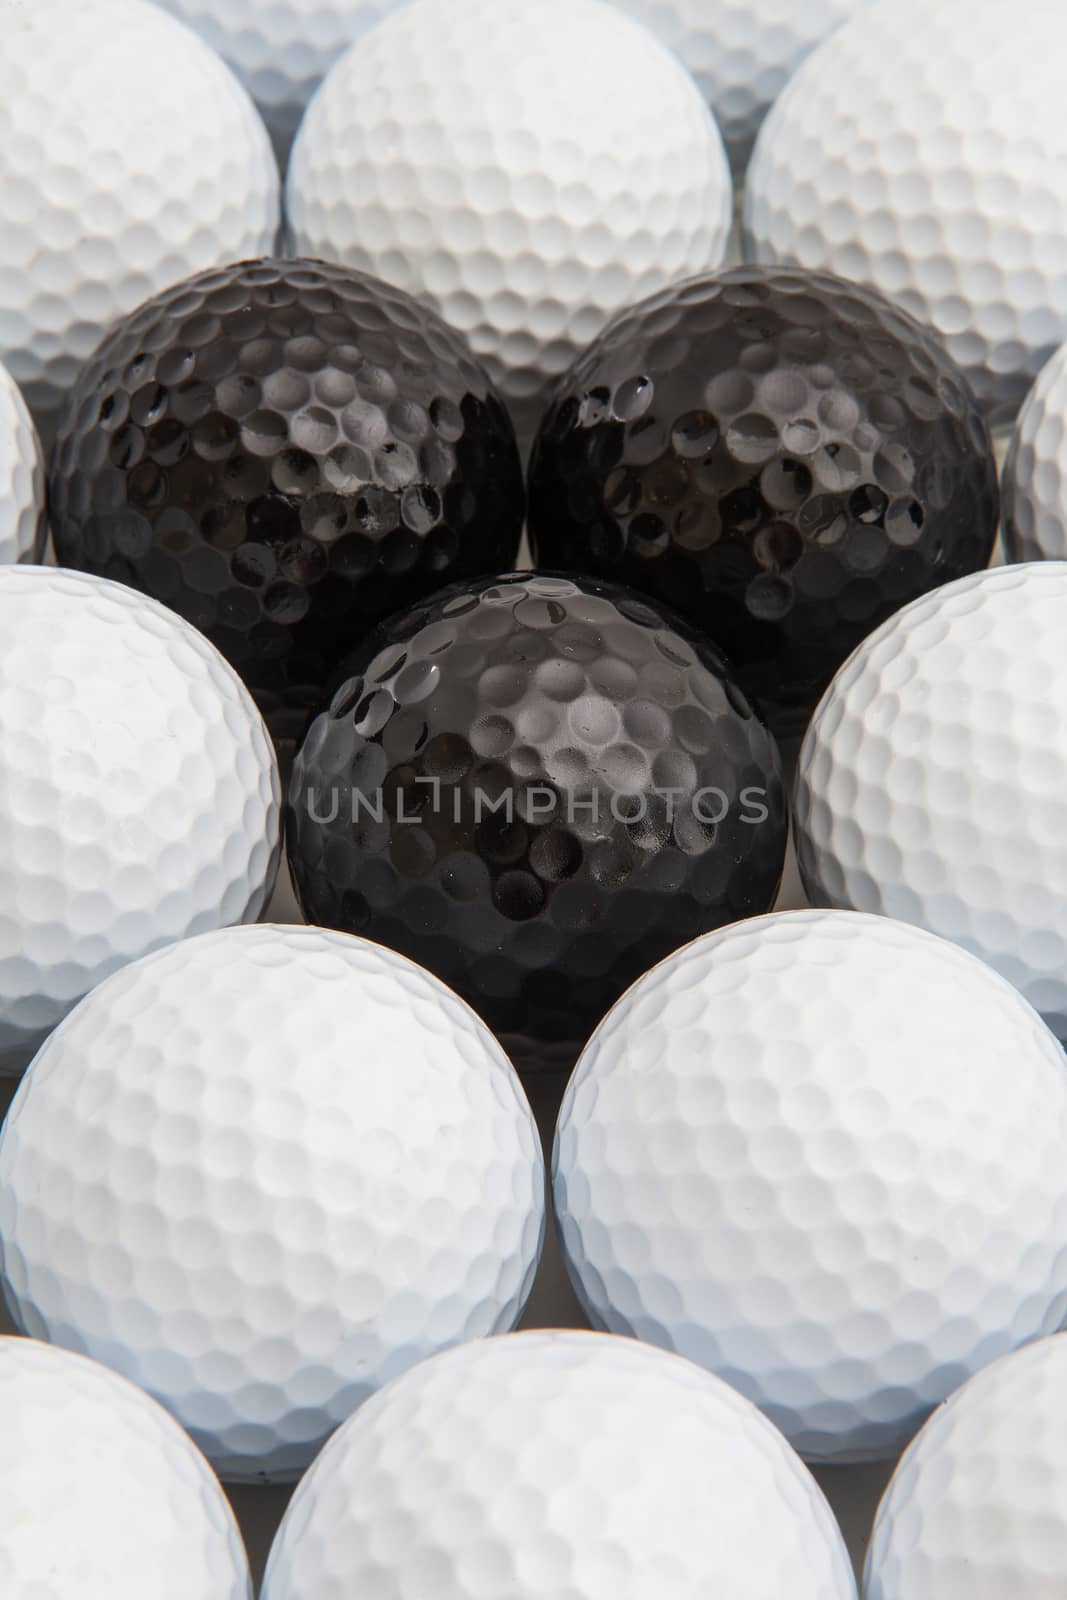 Different black and white golf balls